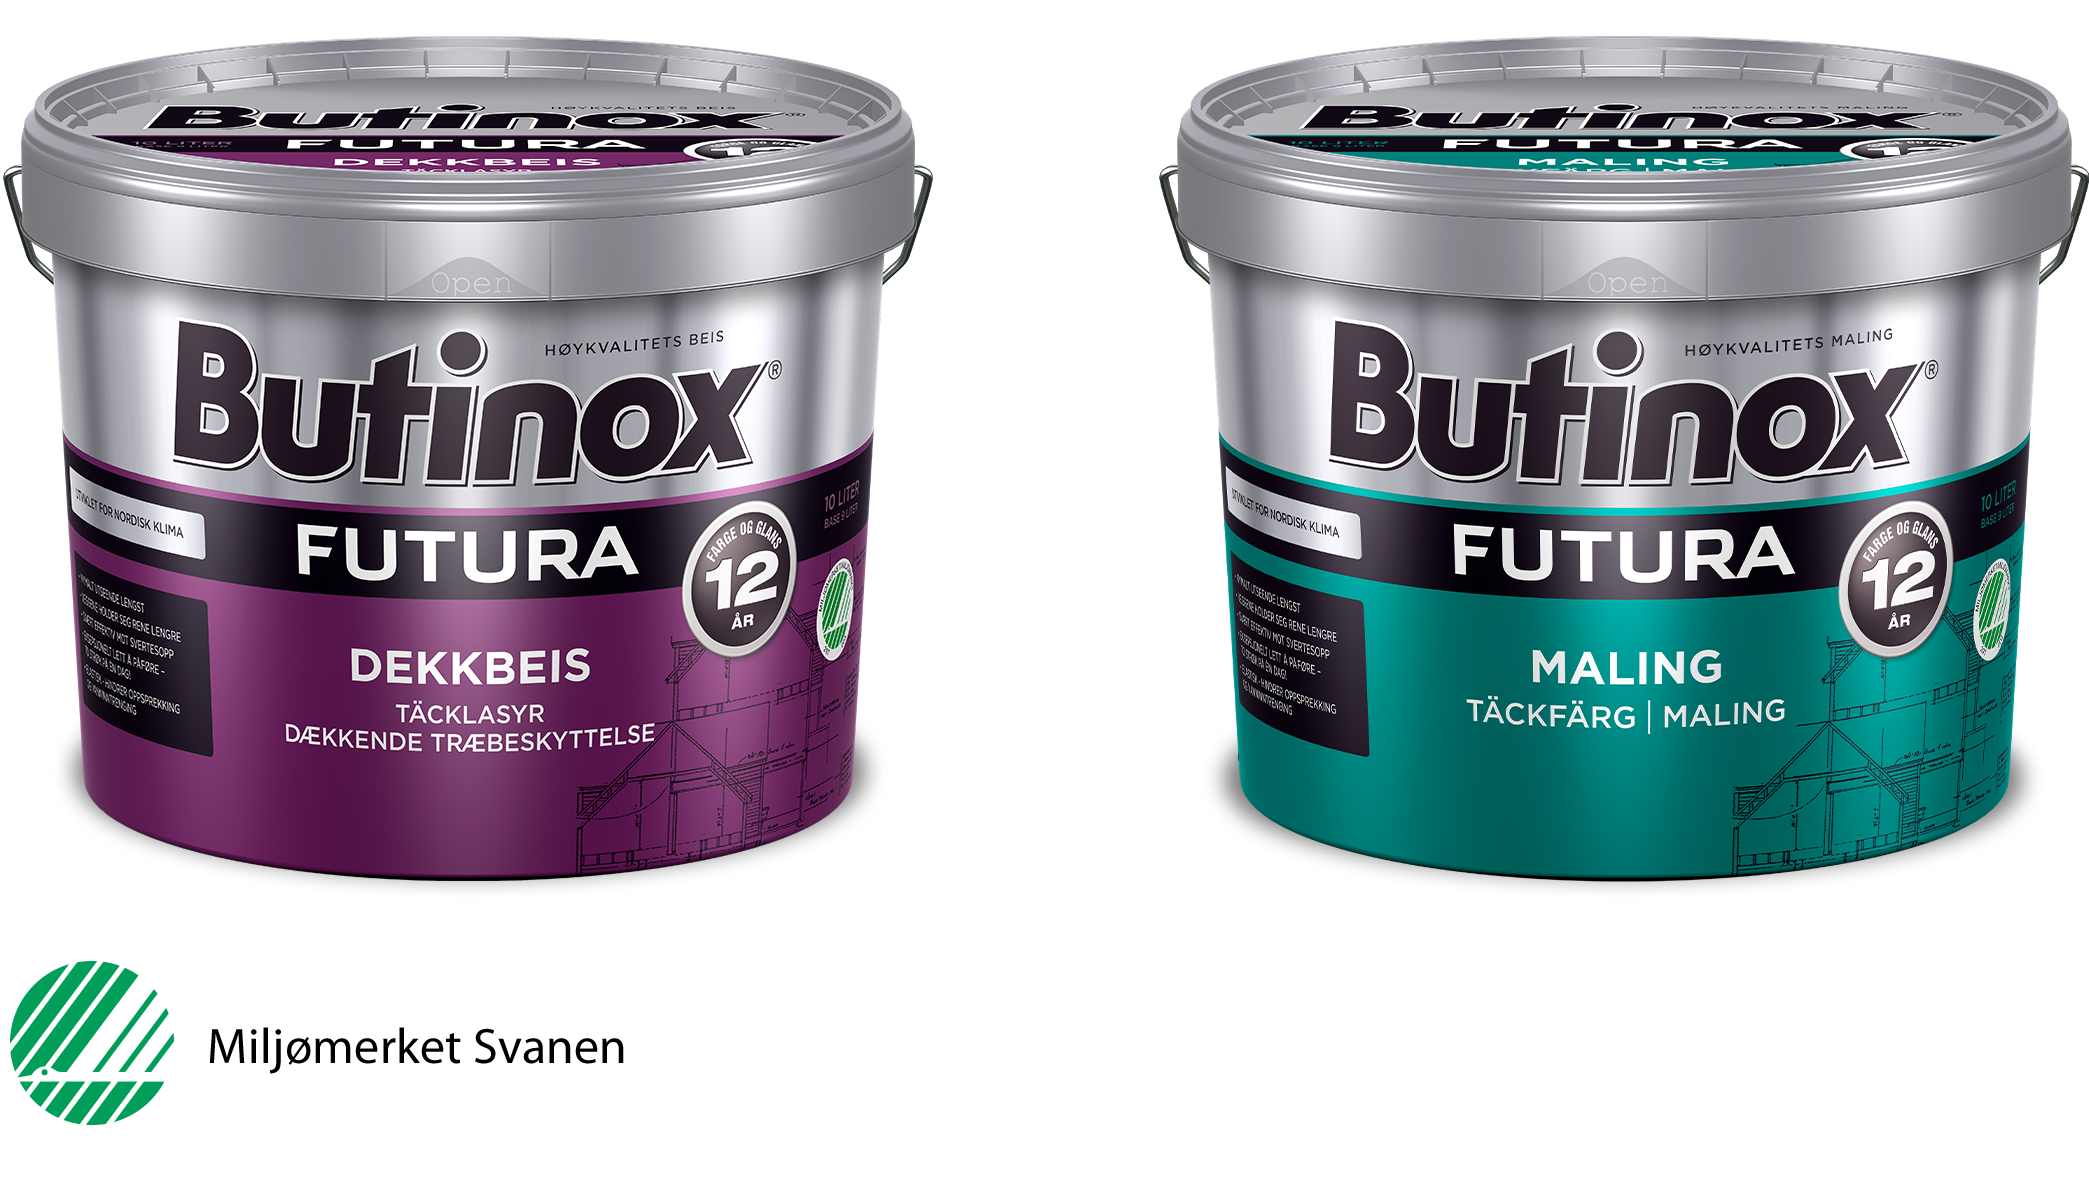 Butinox Futura